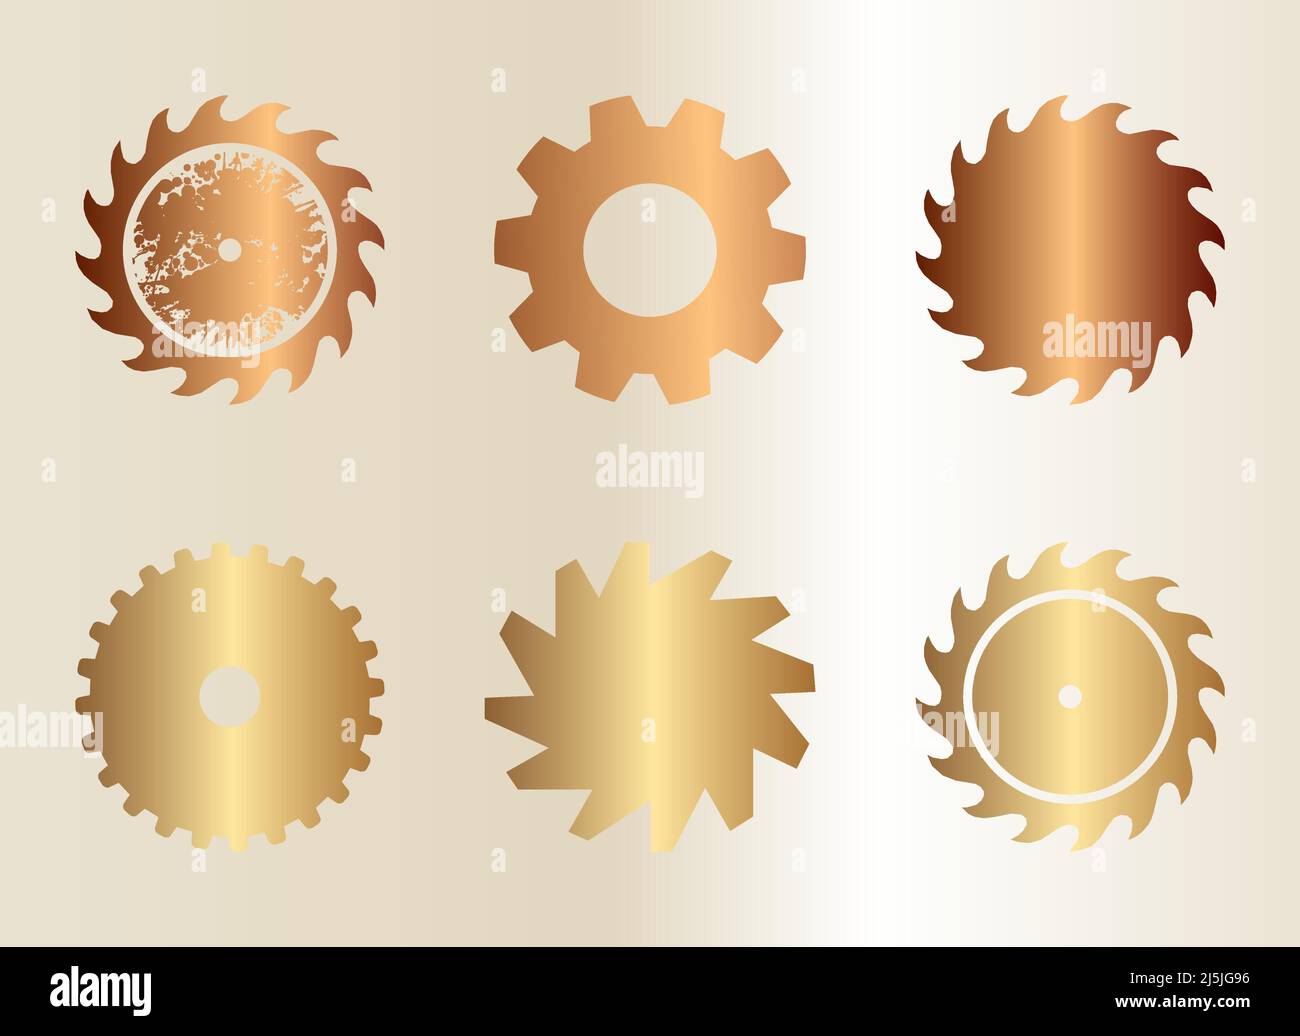 Metallic gears vector element set in gold and copper color Stock Vector